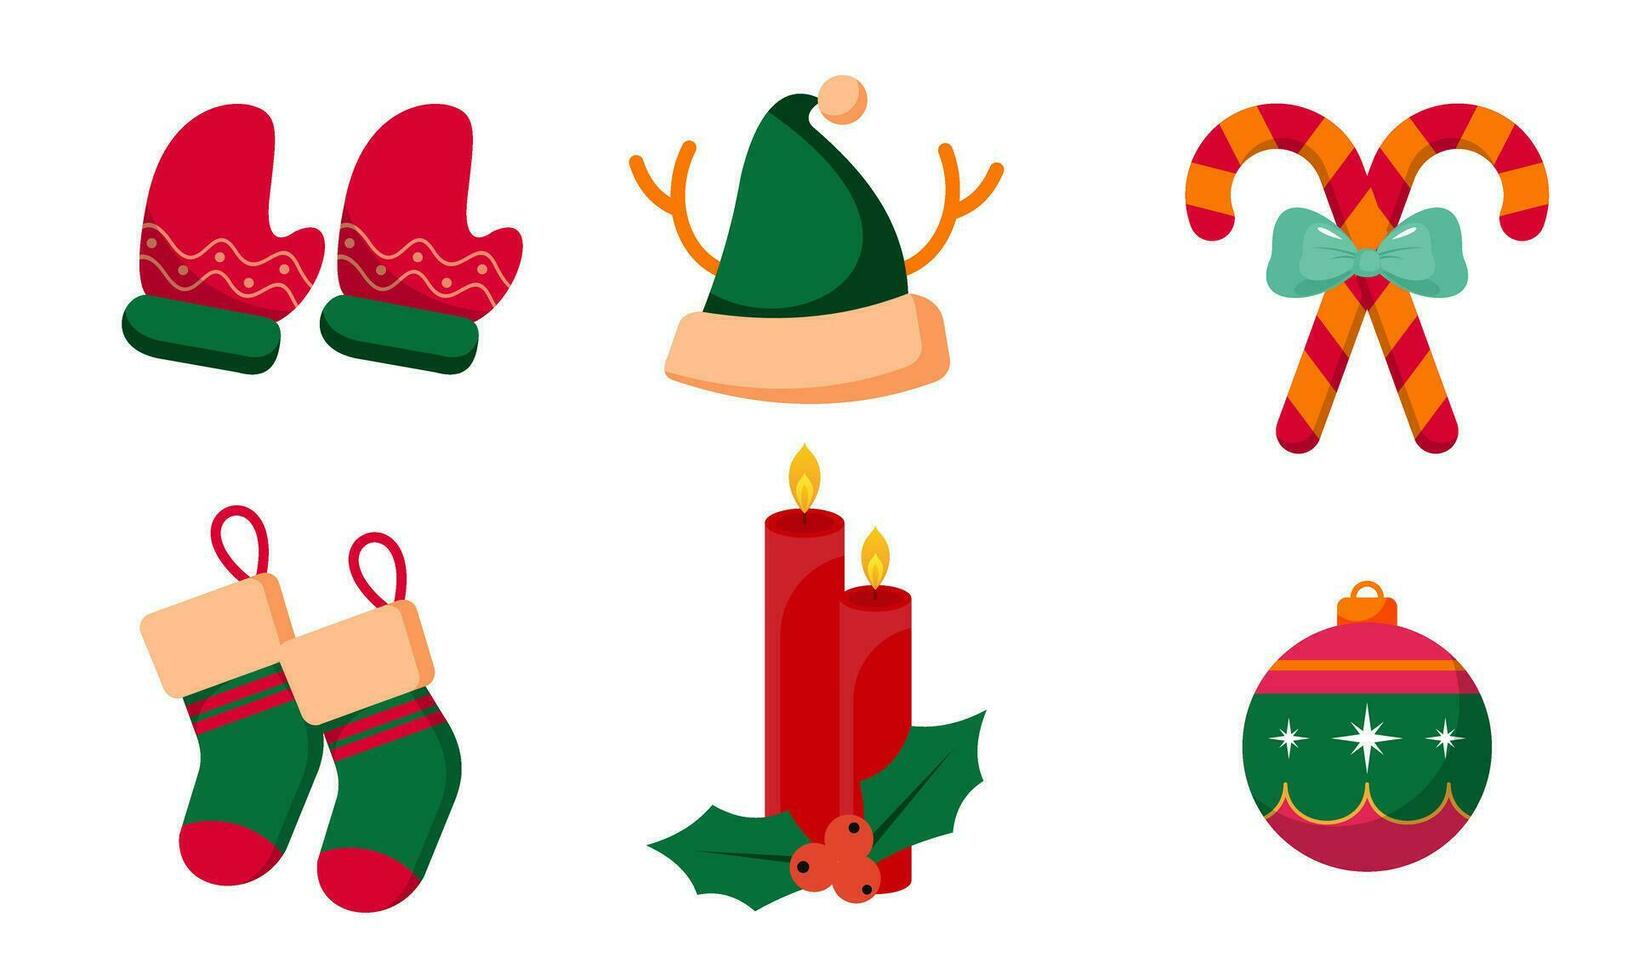 Merry Christmas cute modern minimalist style elements vector